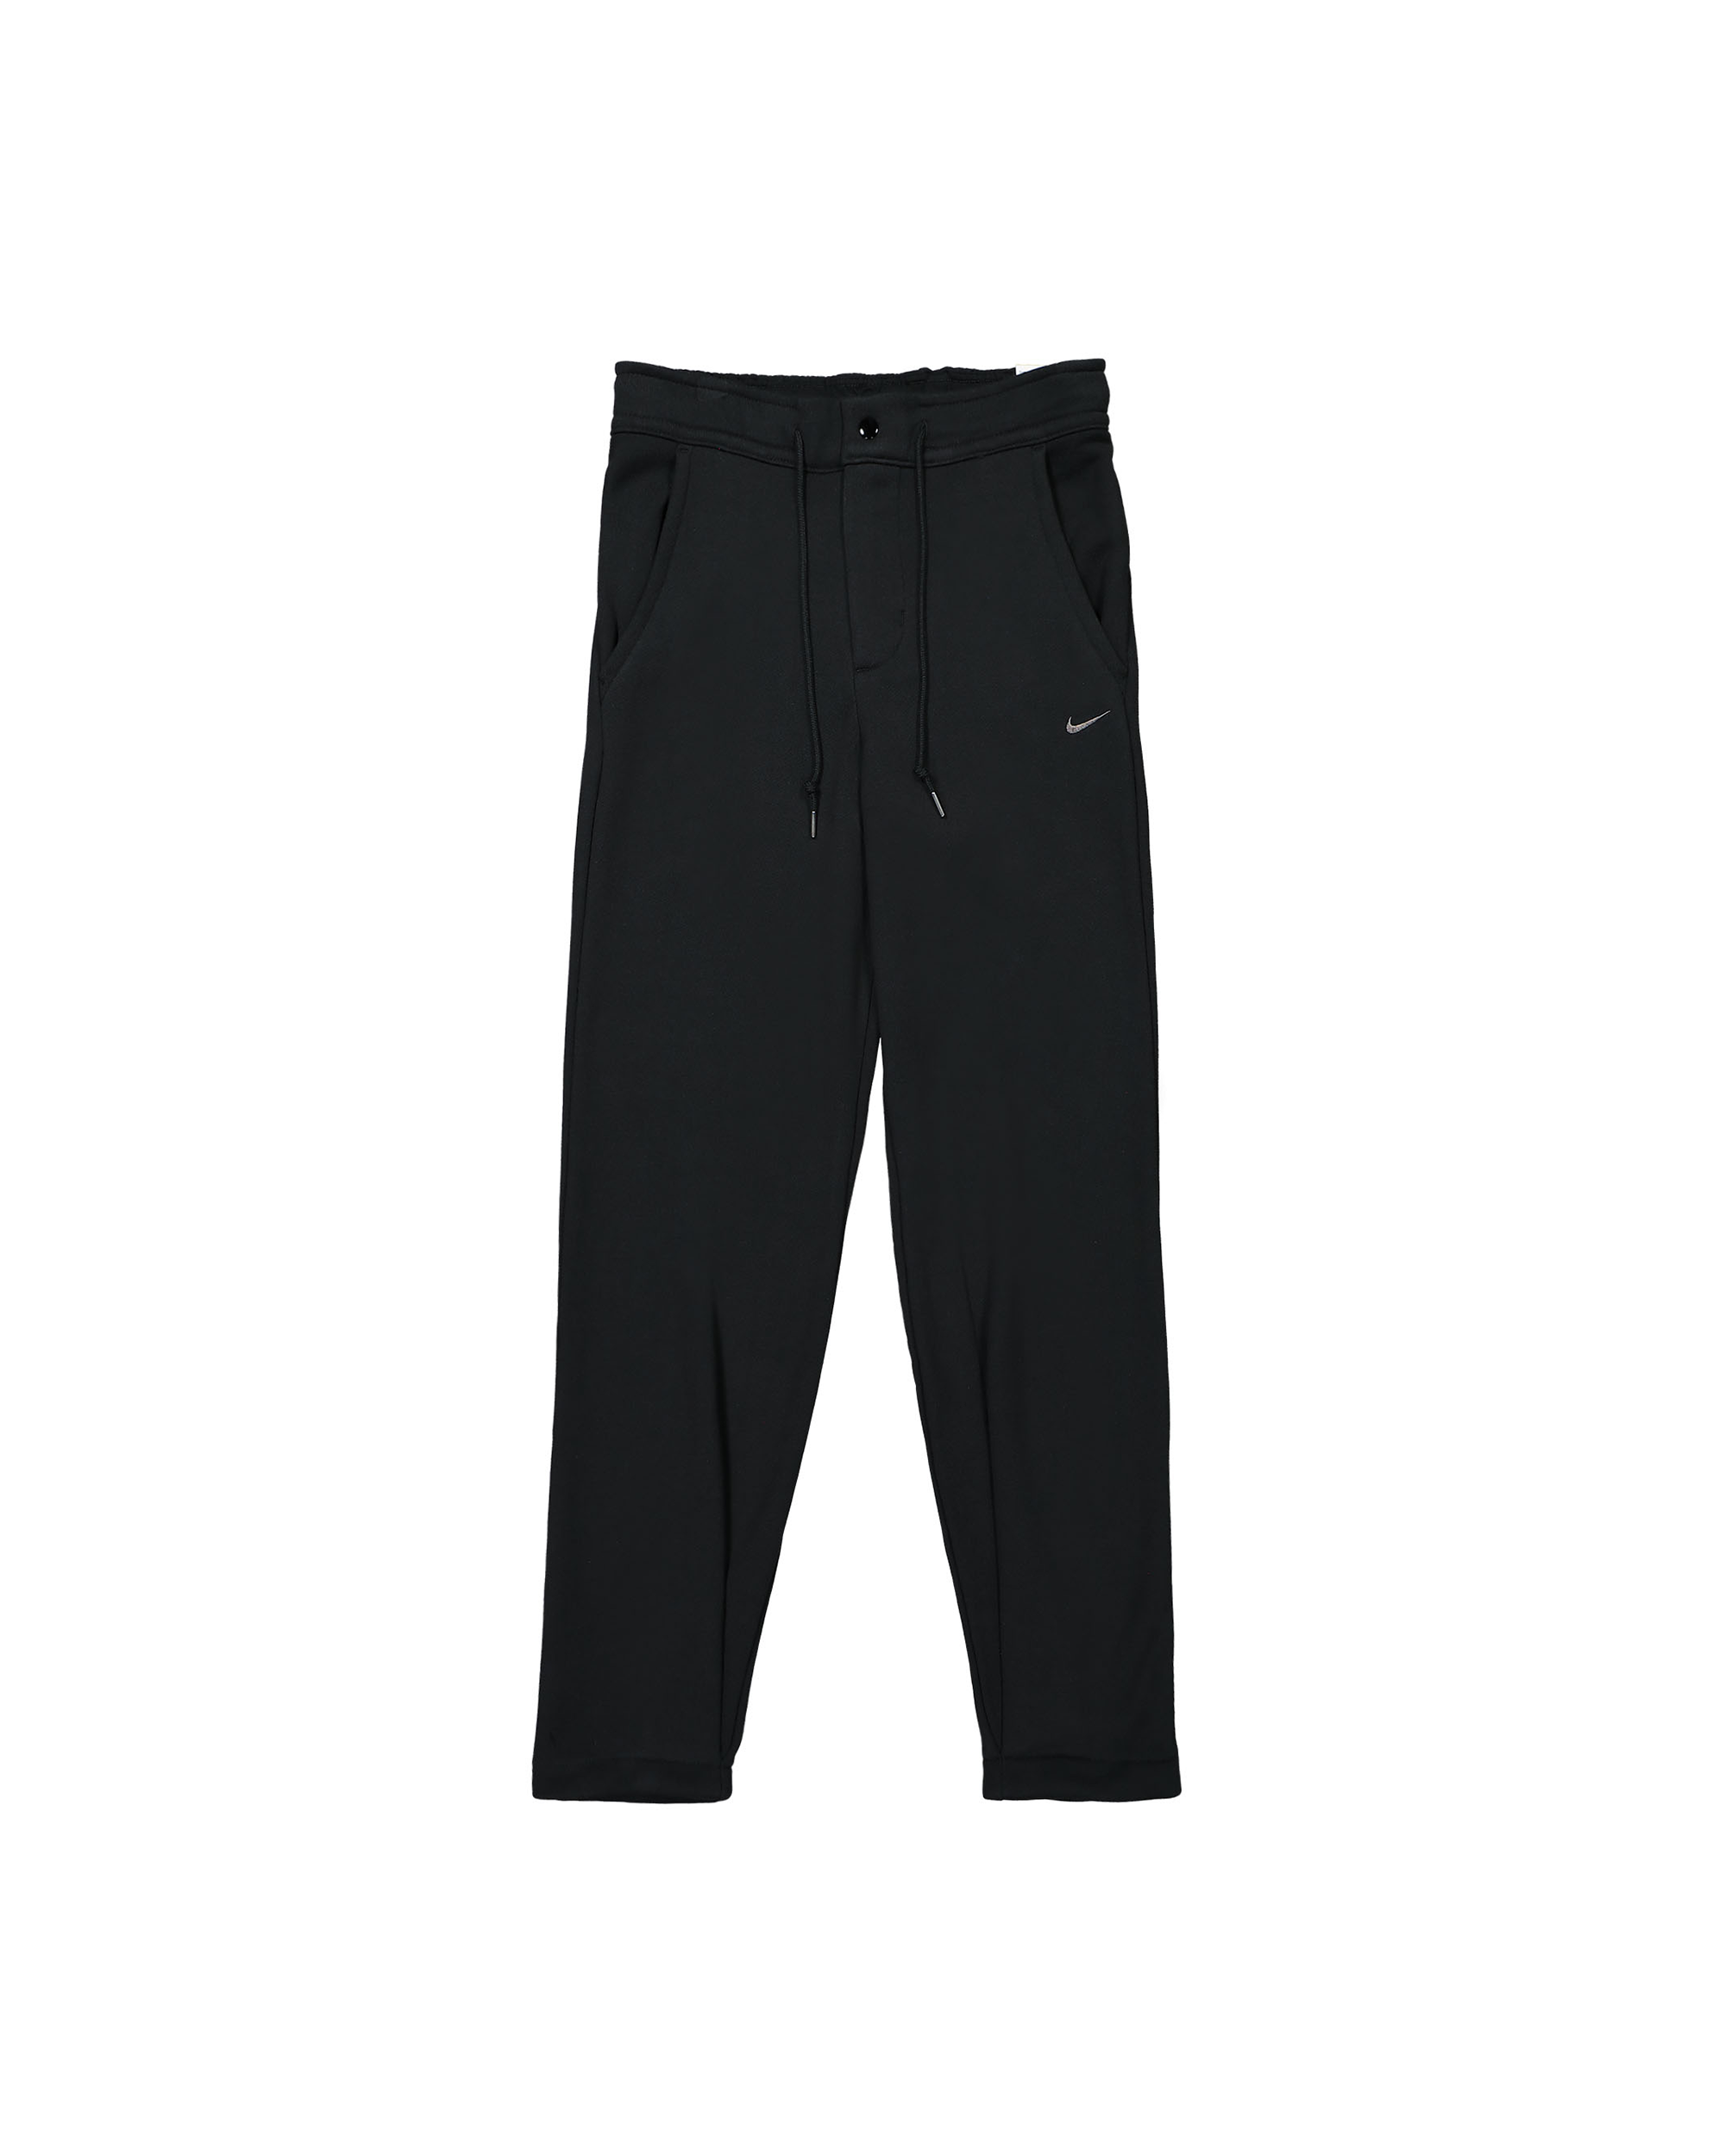 Womens High-Waisted Sweatpants - Black / Flat Pewter